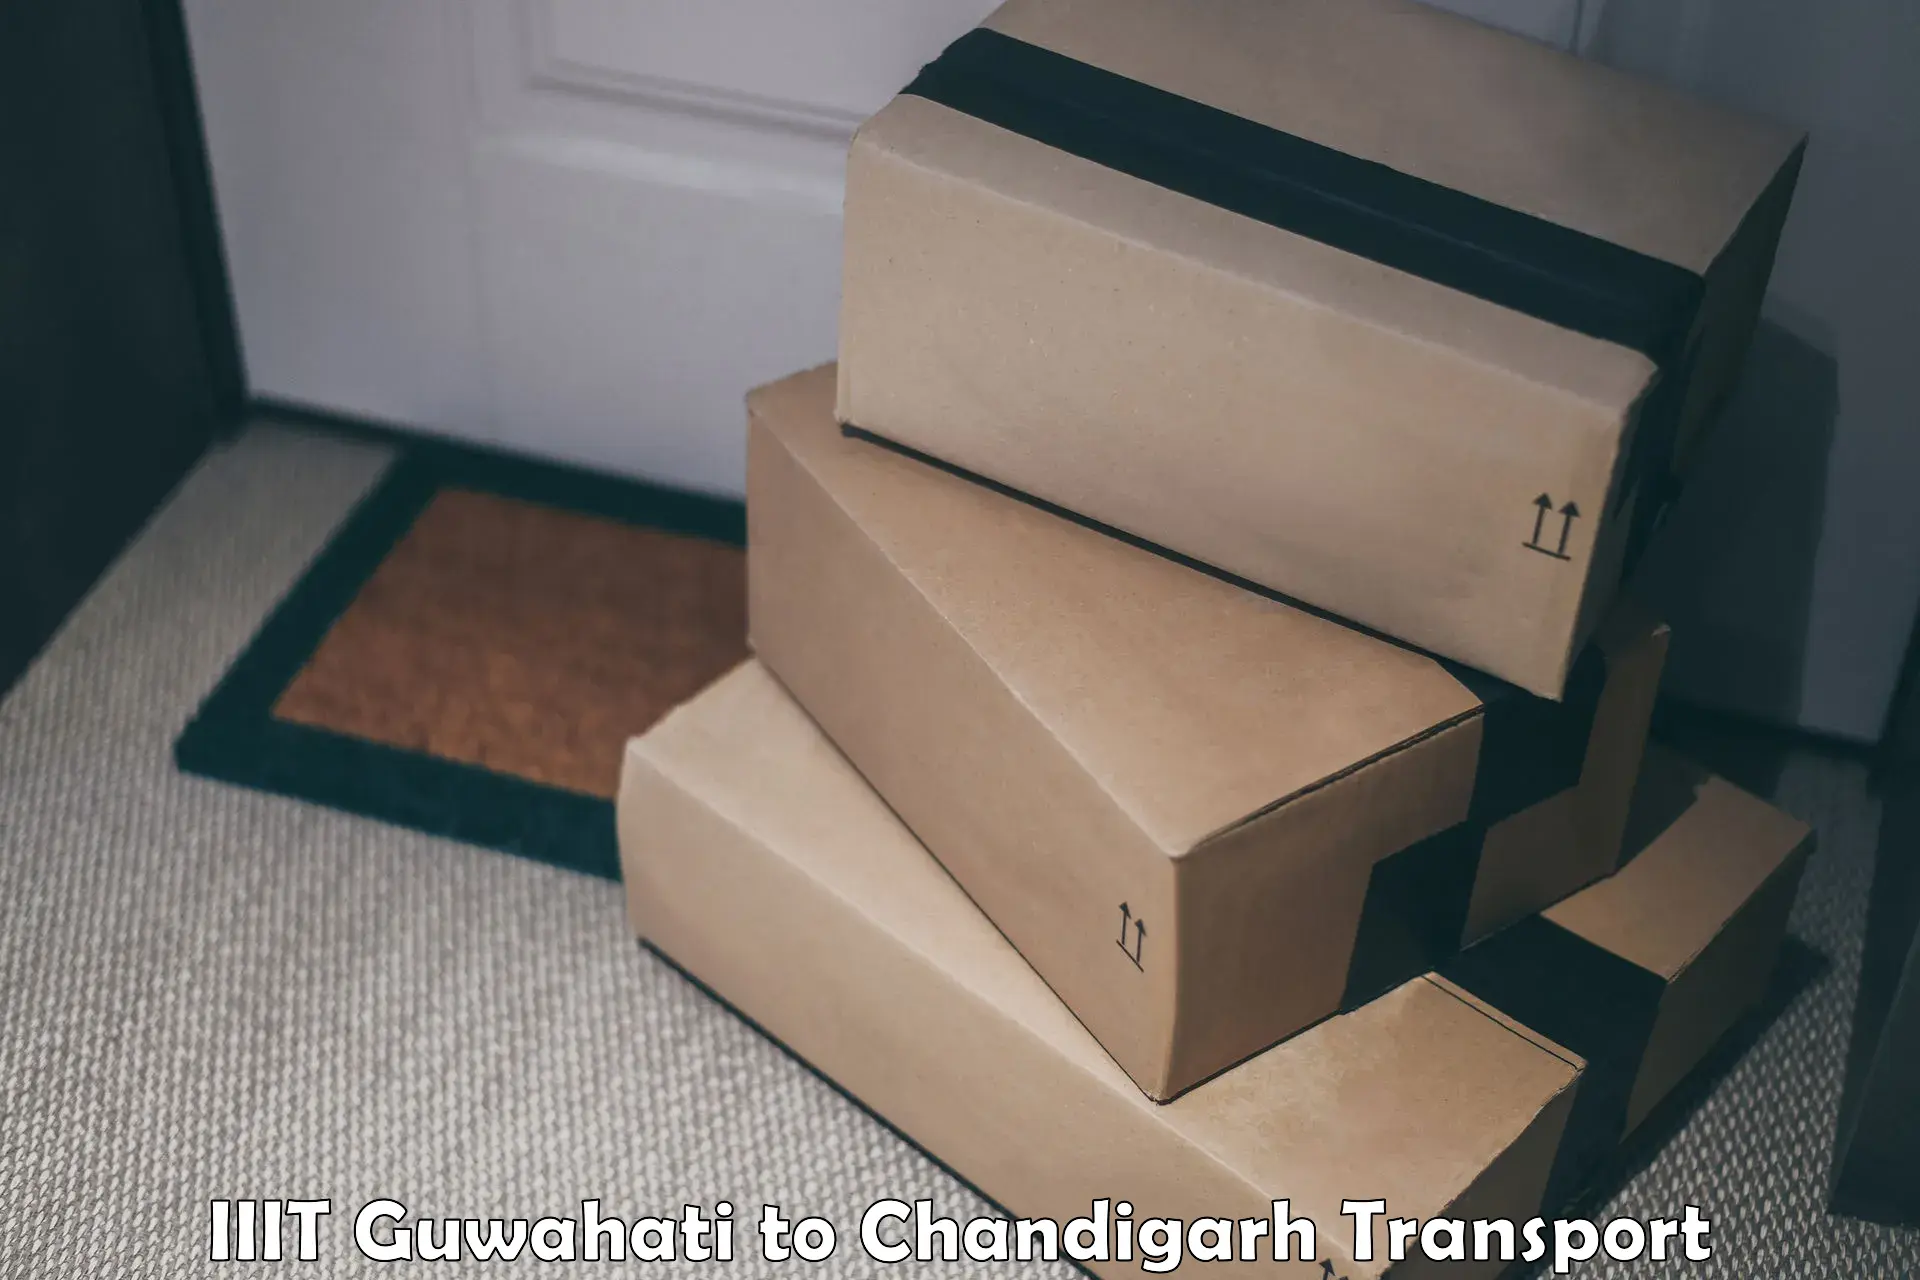 Goods delivery service IIIT Guwahati to Chandigarh